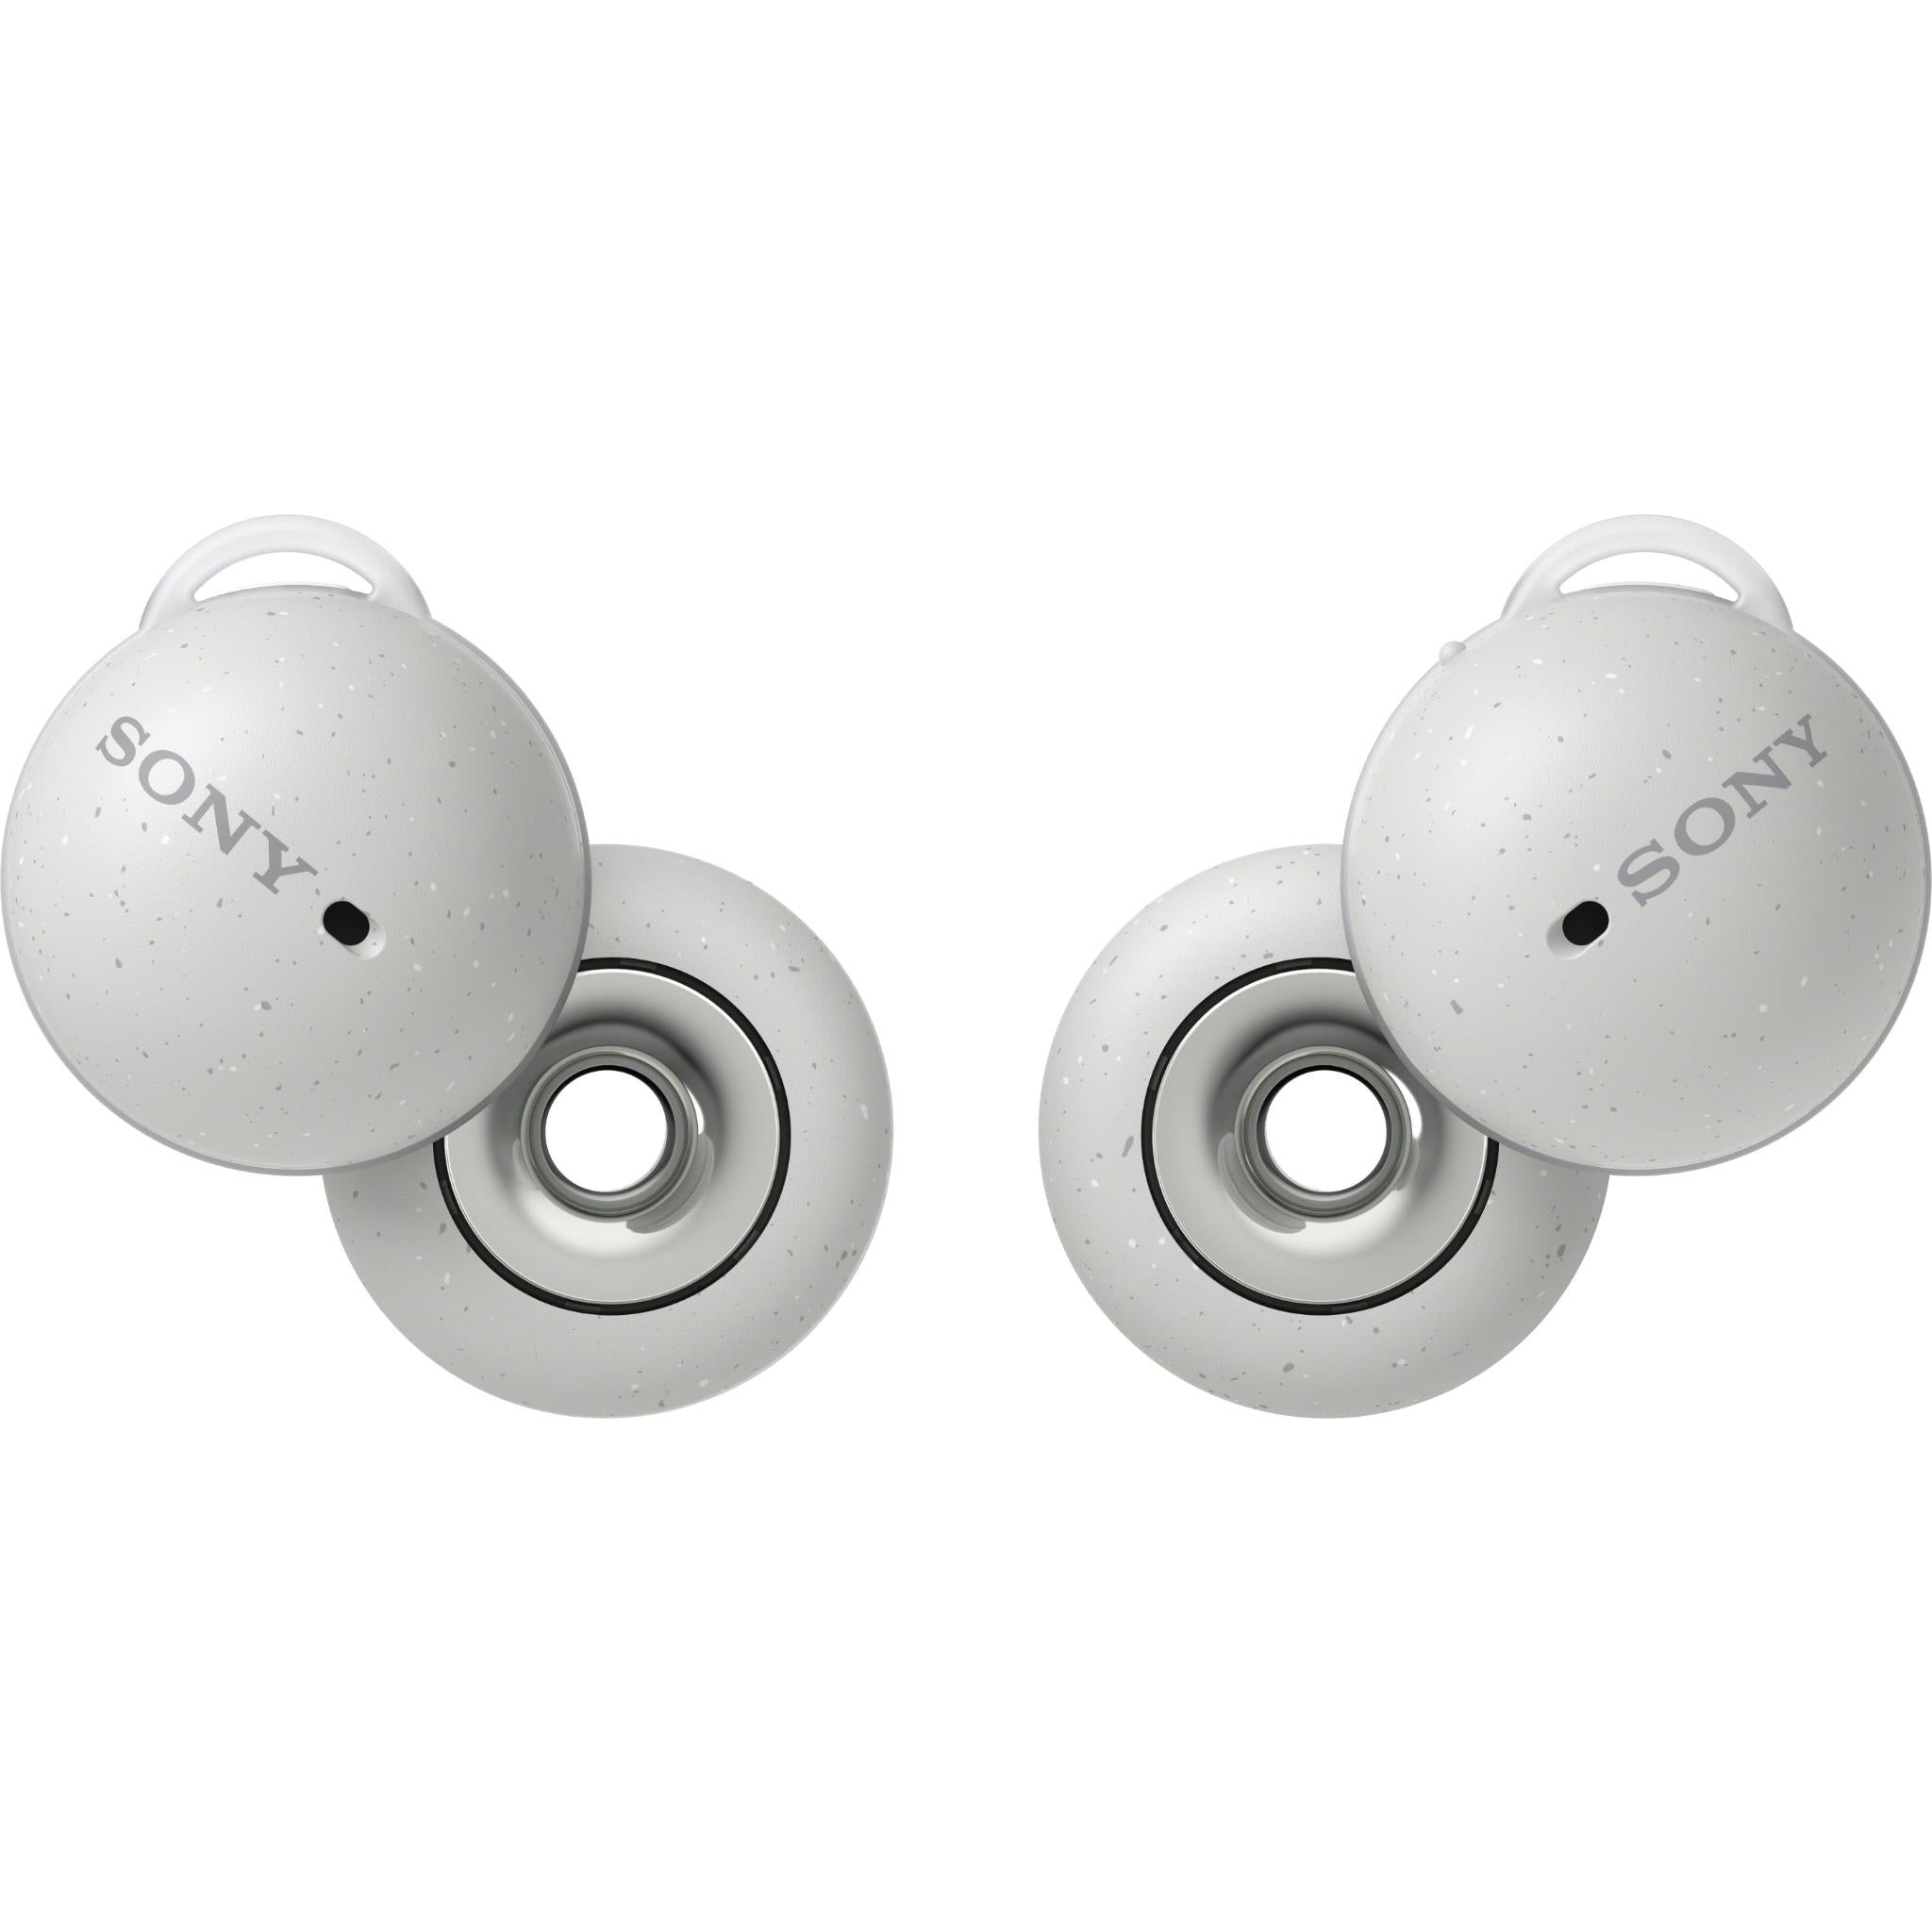 sony wf-l900h linkbuds truly wireless in-ear headphones (white)